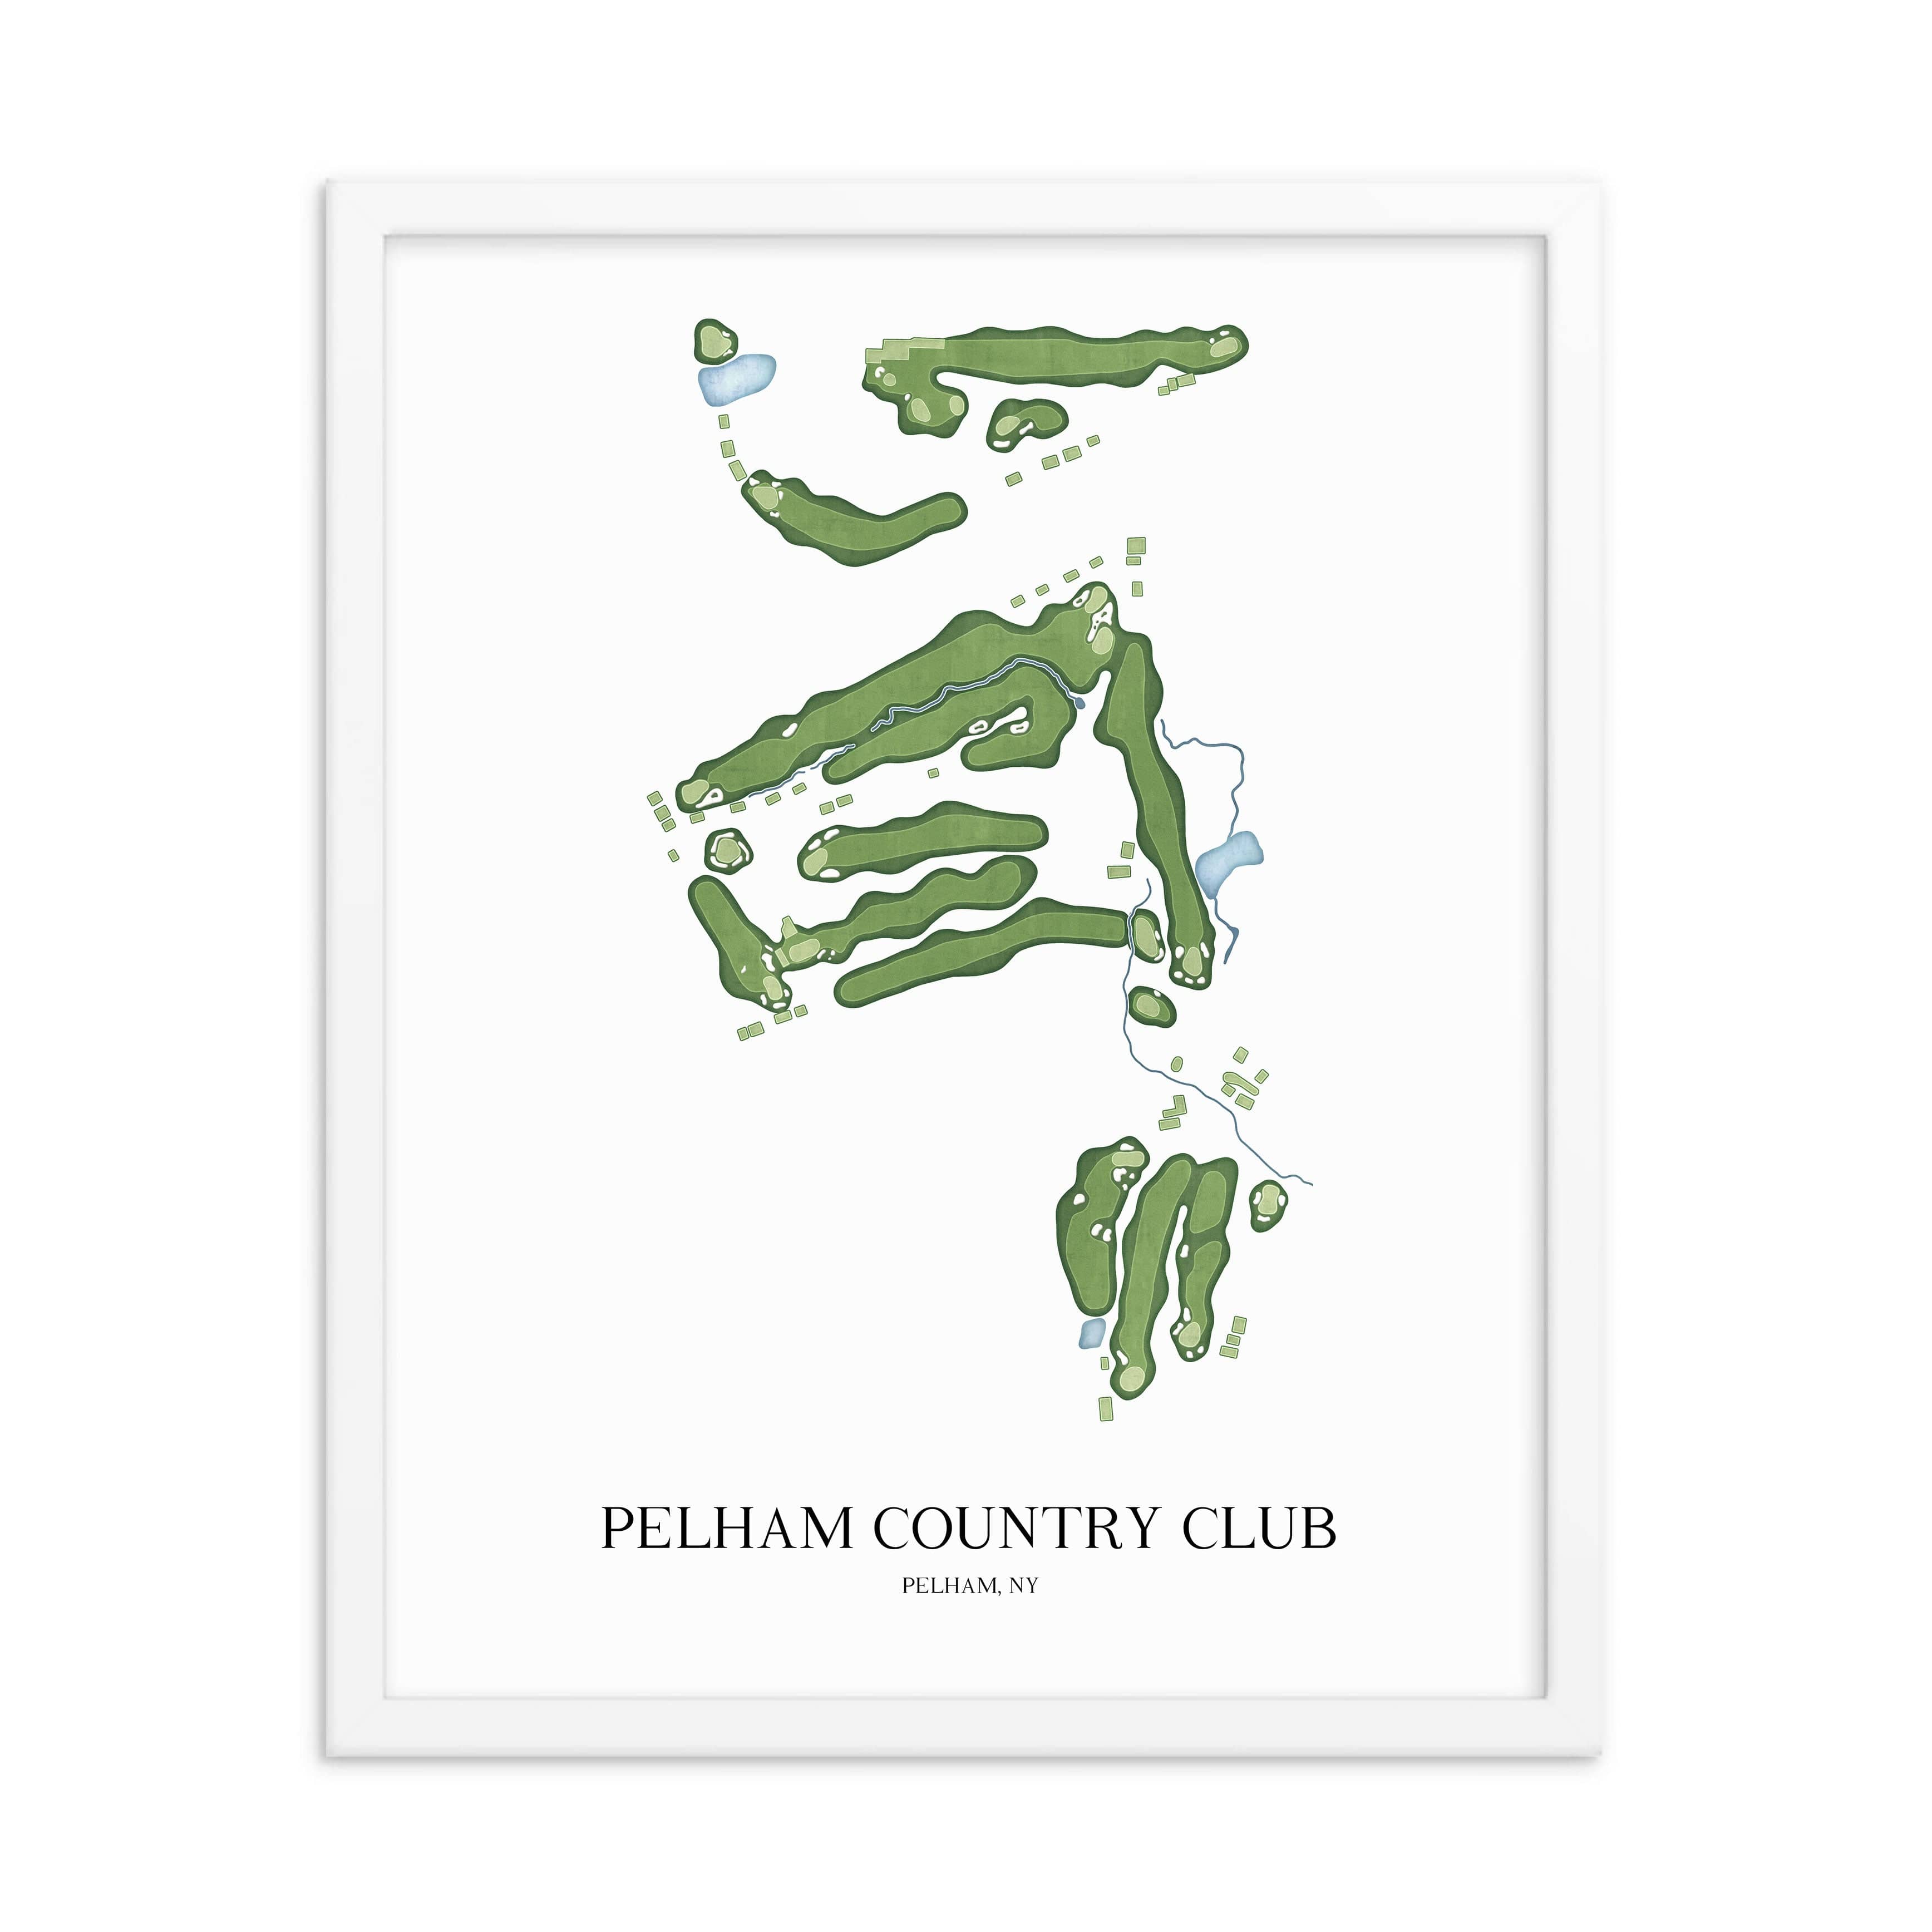 The 19th Hole Golf Shop - Golf Course Prints -  Pelham Country Club Golf Course Map